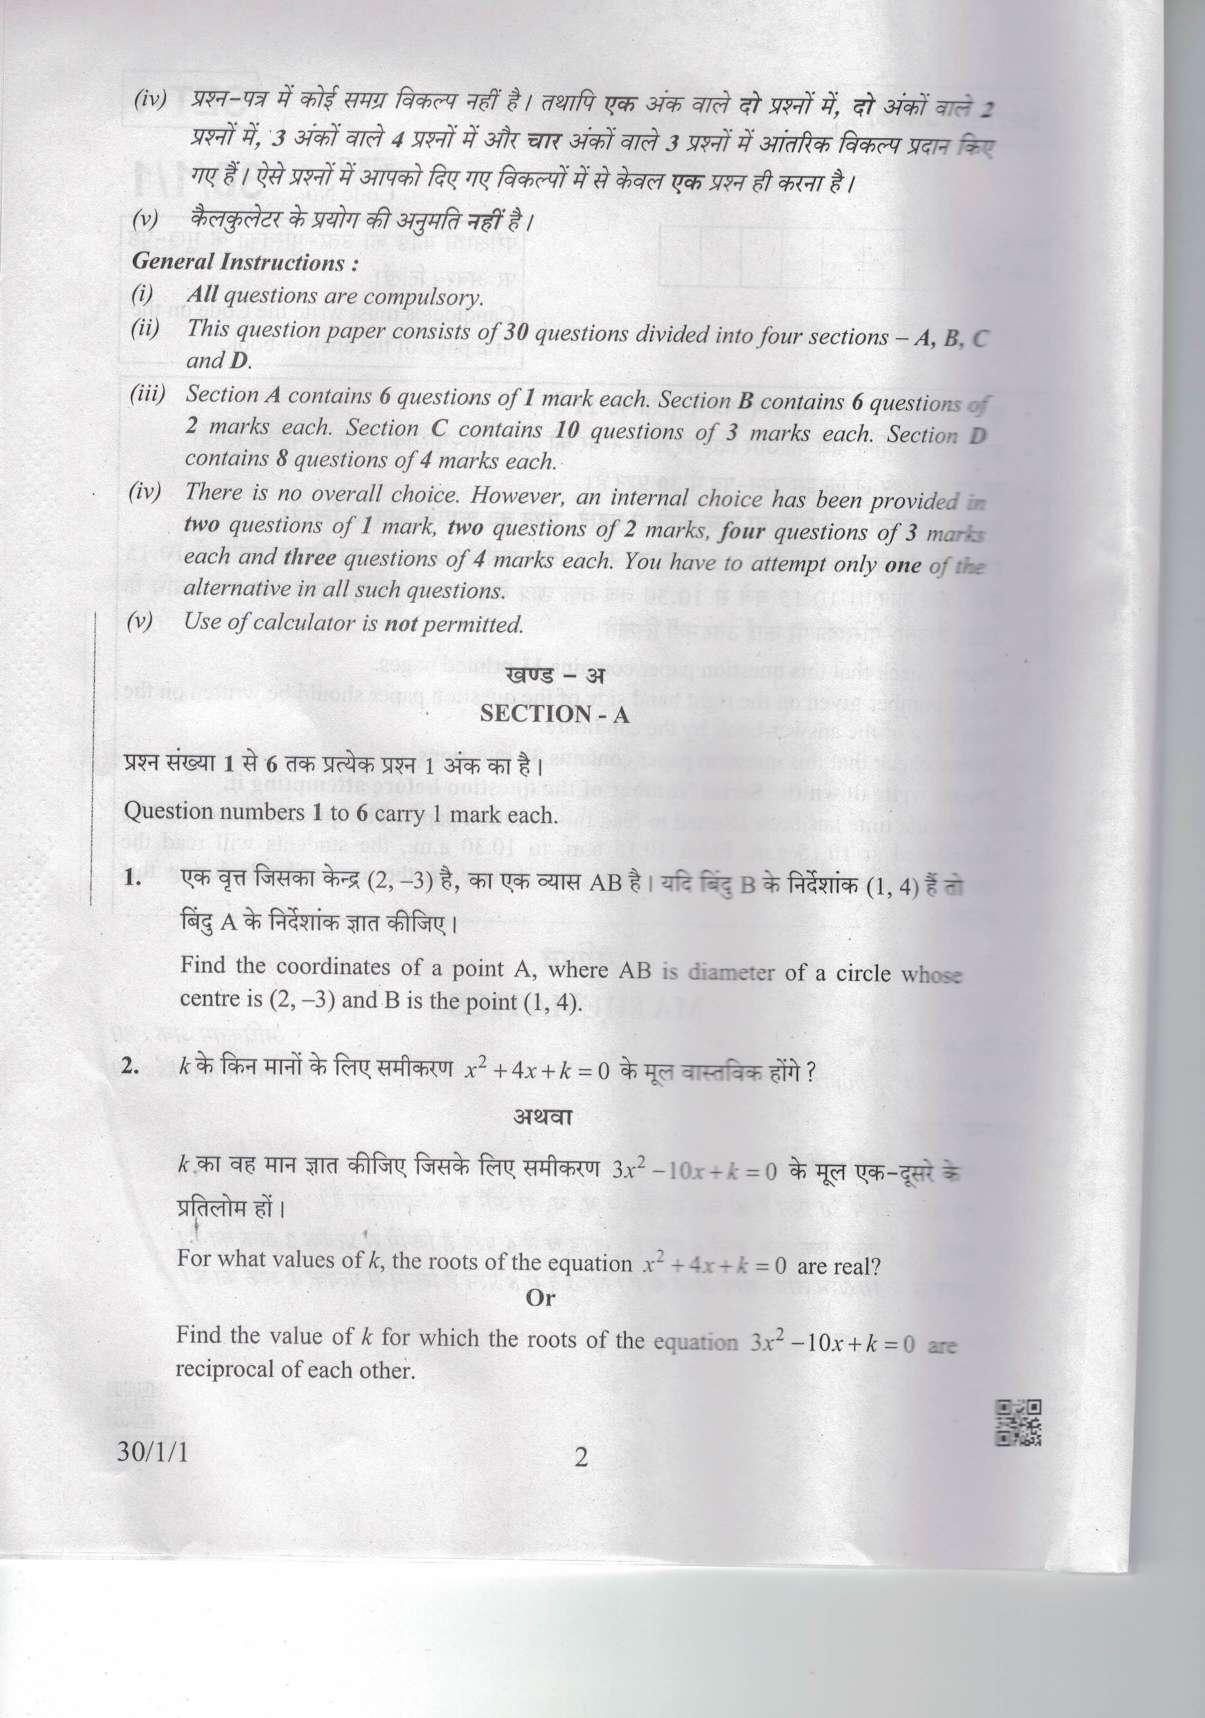 CBSE Class 10 30-1-1 Mathematics 2019 Question Paper - Page 2